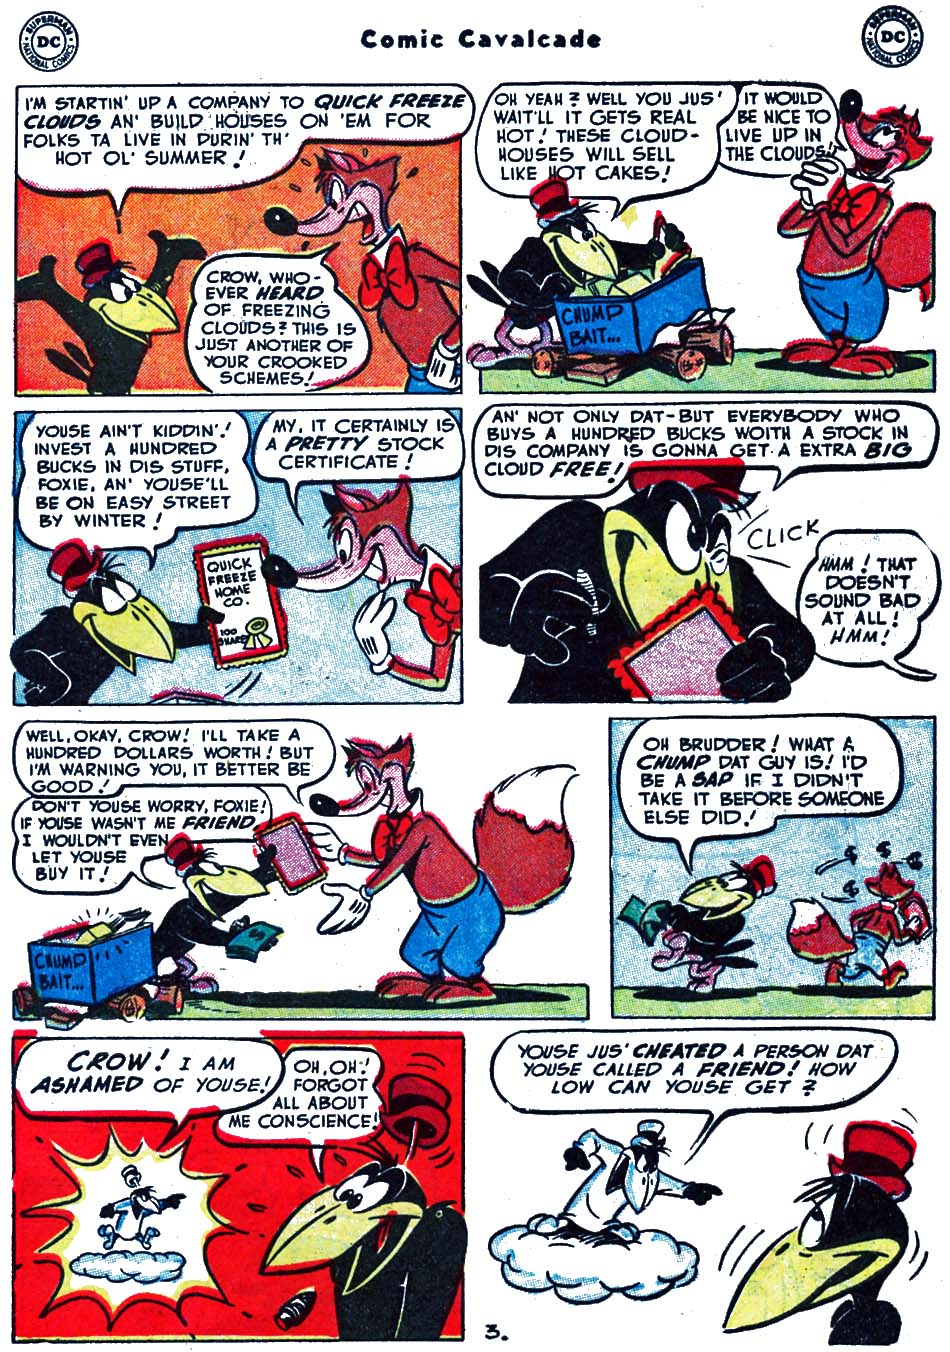 Comic Cavalcade issue 51 - Page 5